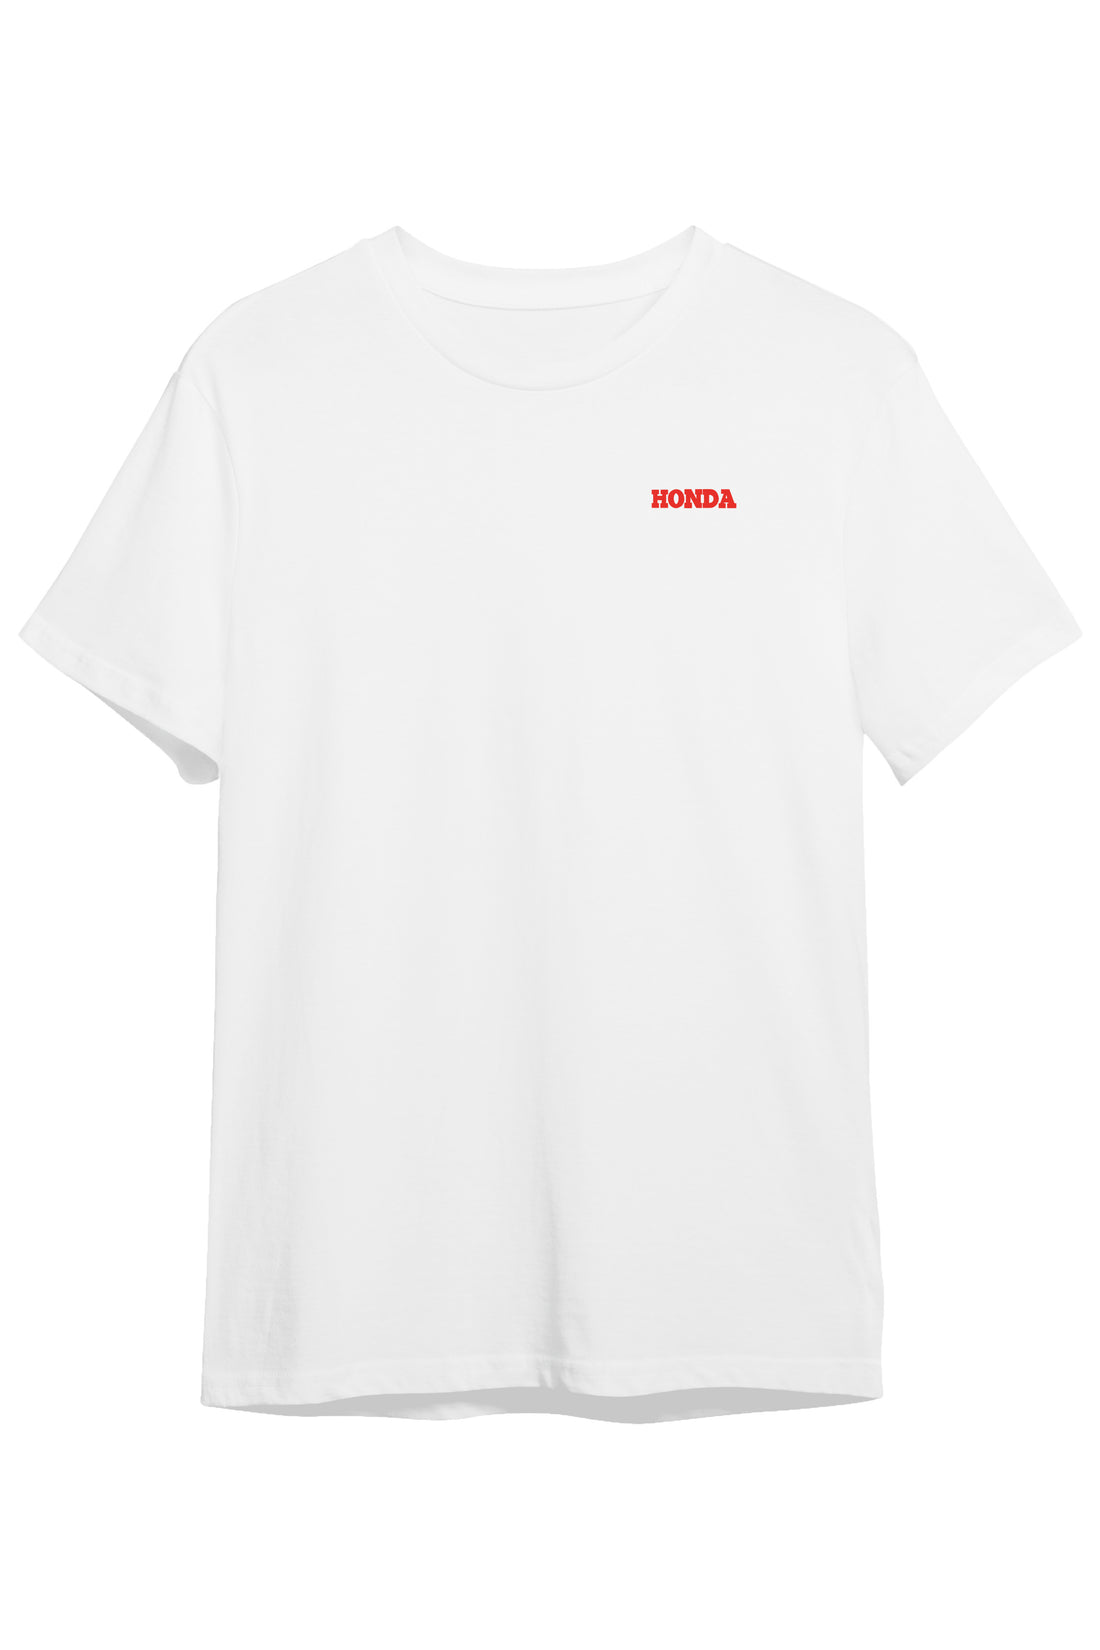 Honda - Regular Tshirt